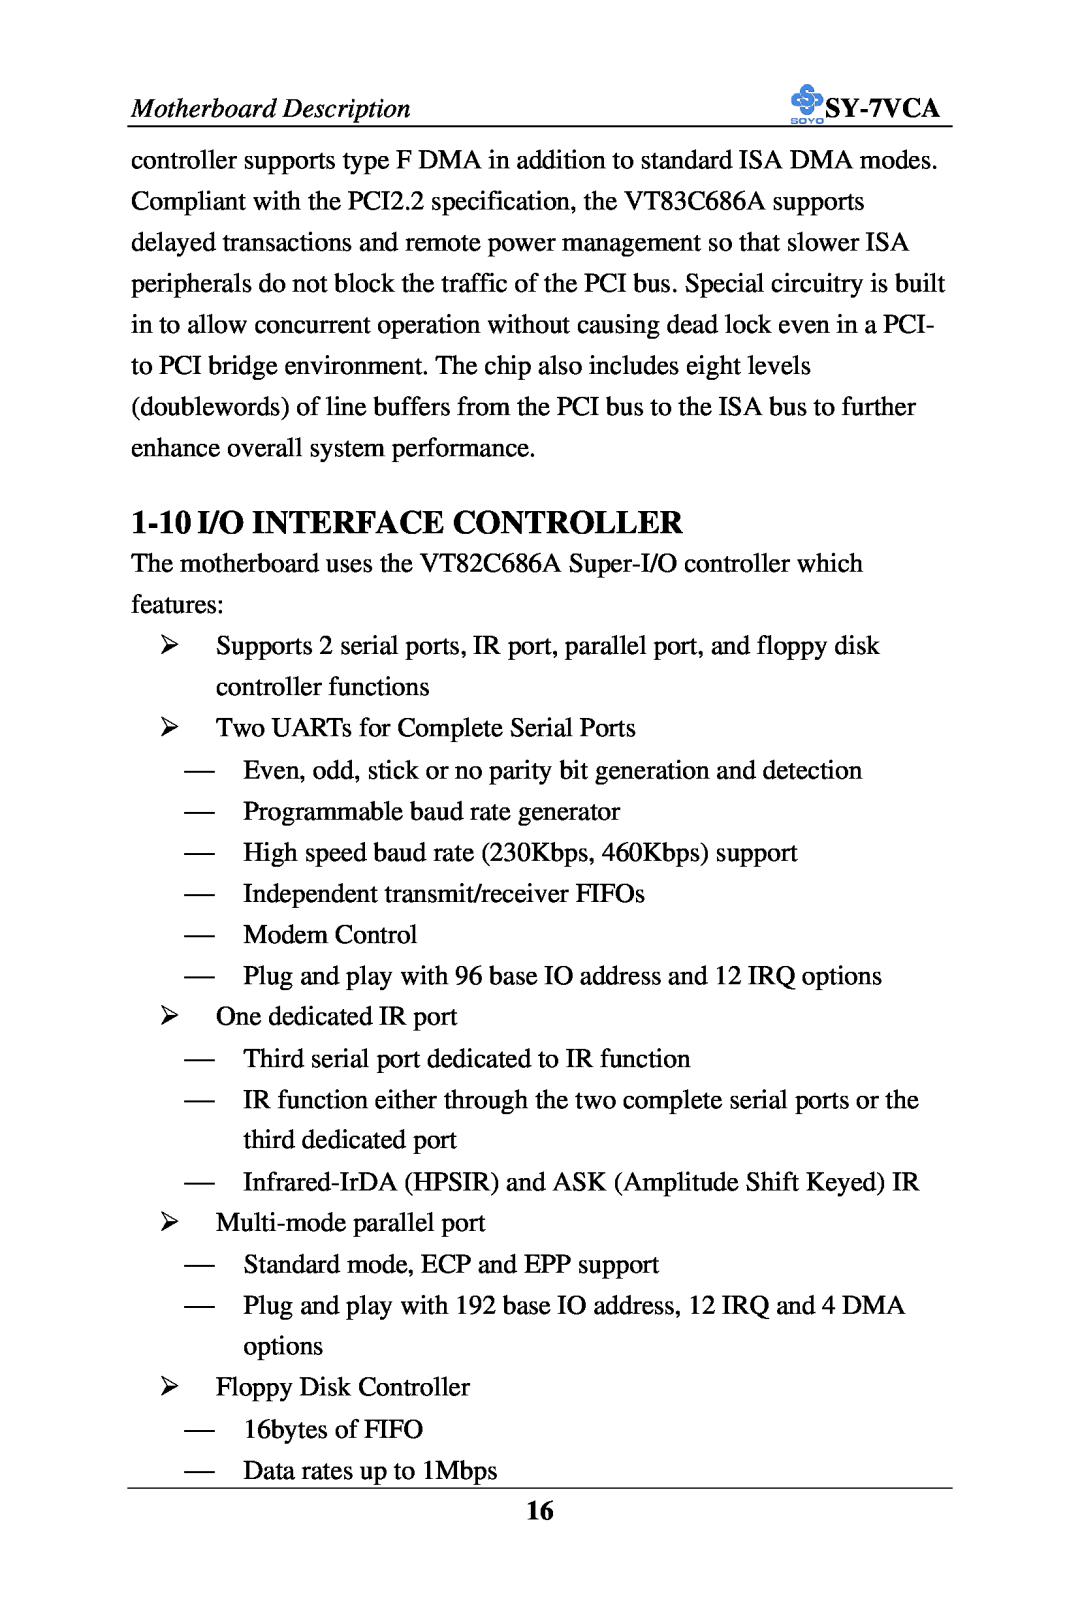 SOYO SY-7VCA user manual 1-10 I/O INTERFACE CONTROLLER 